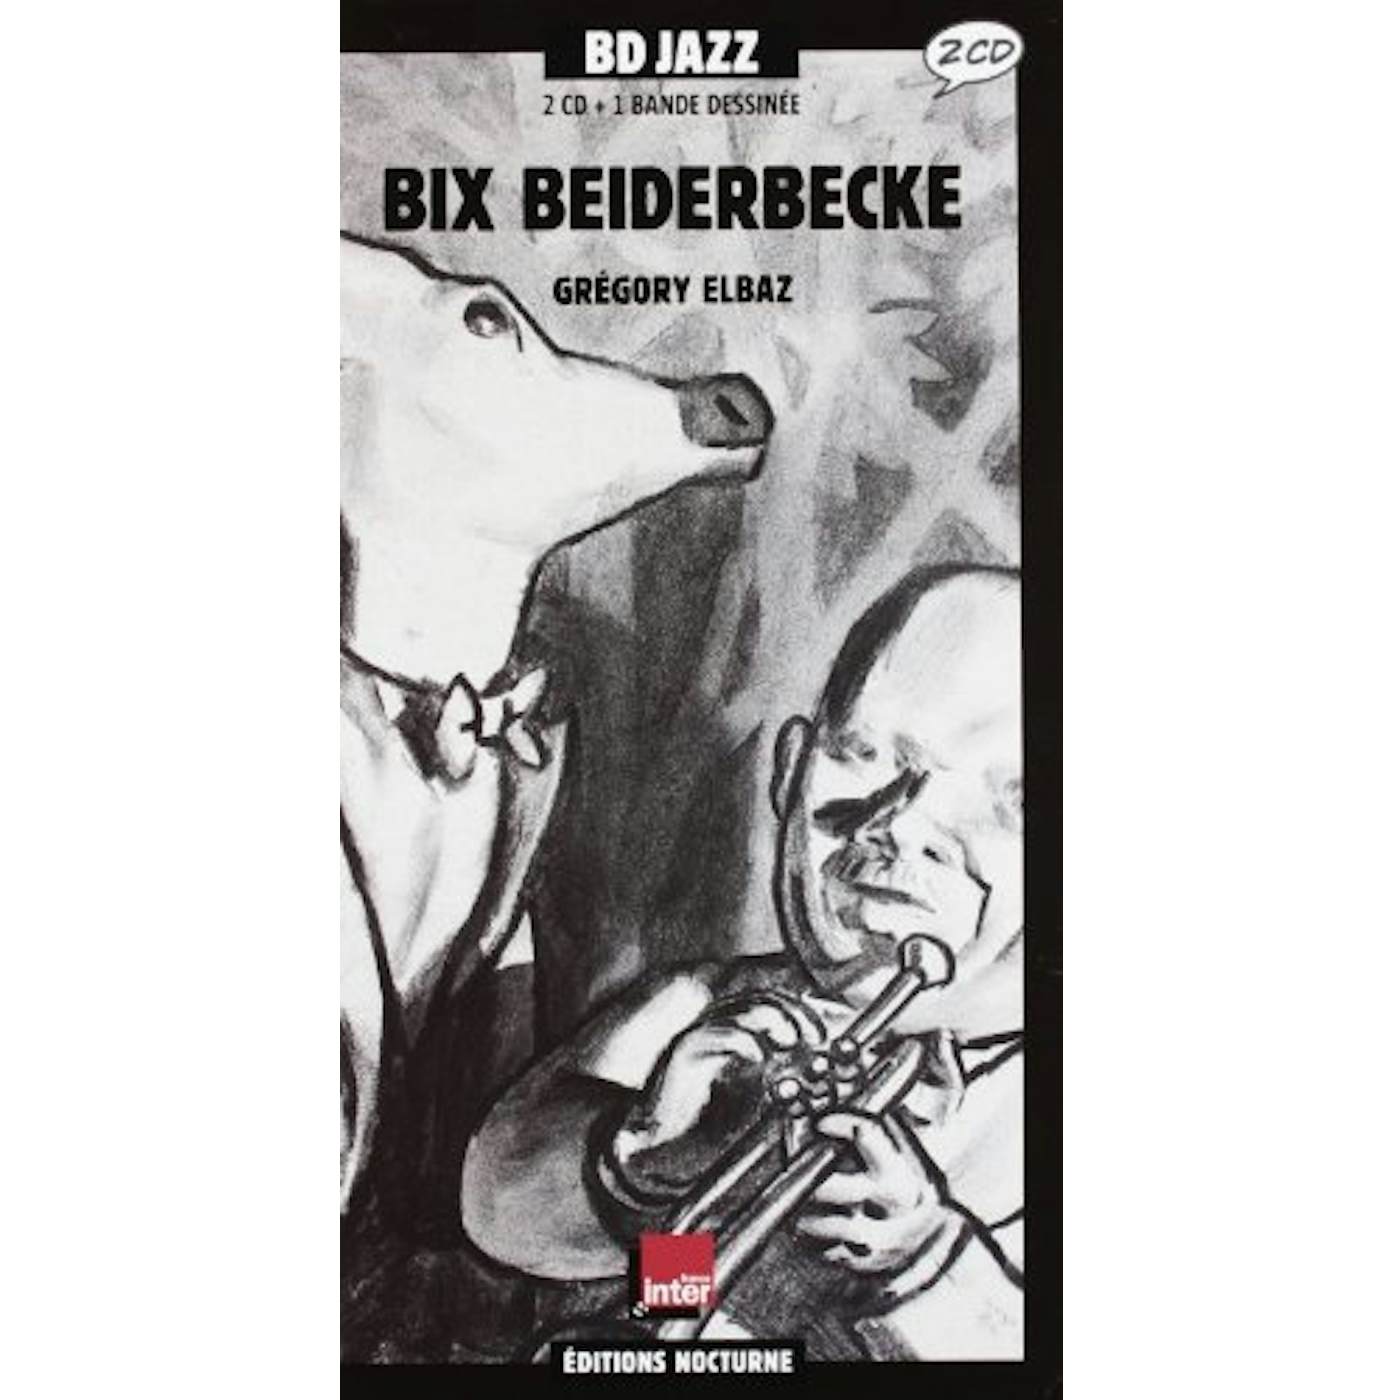 Bix Beiderbecke GREGORY ELBAZ CD